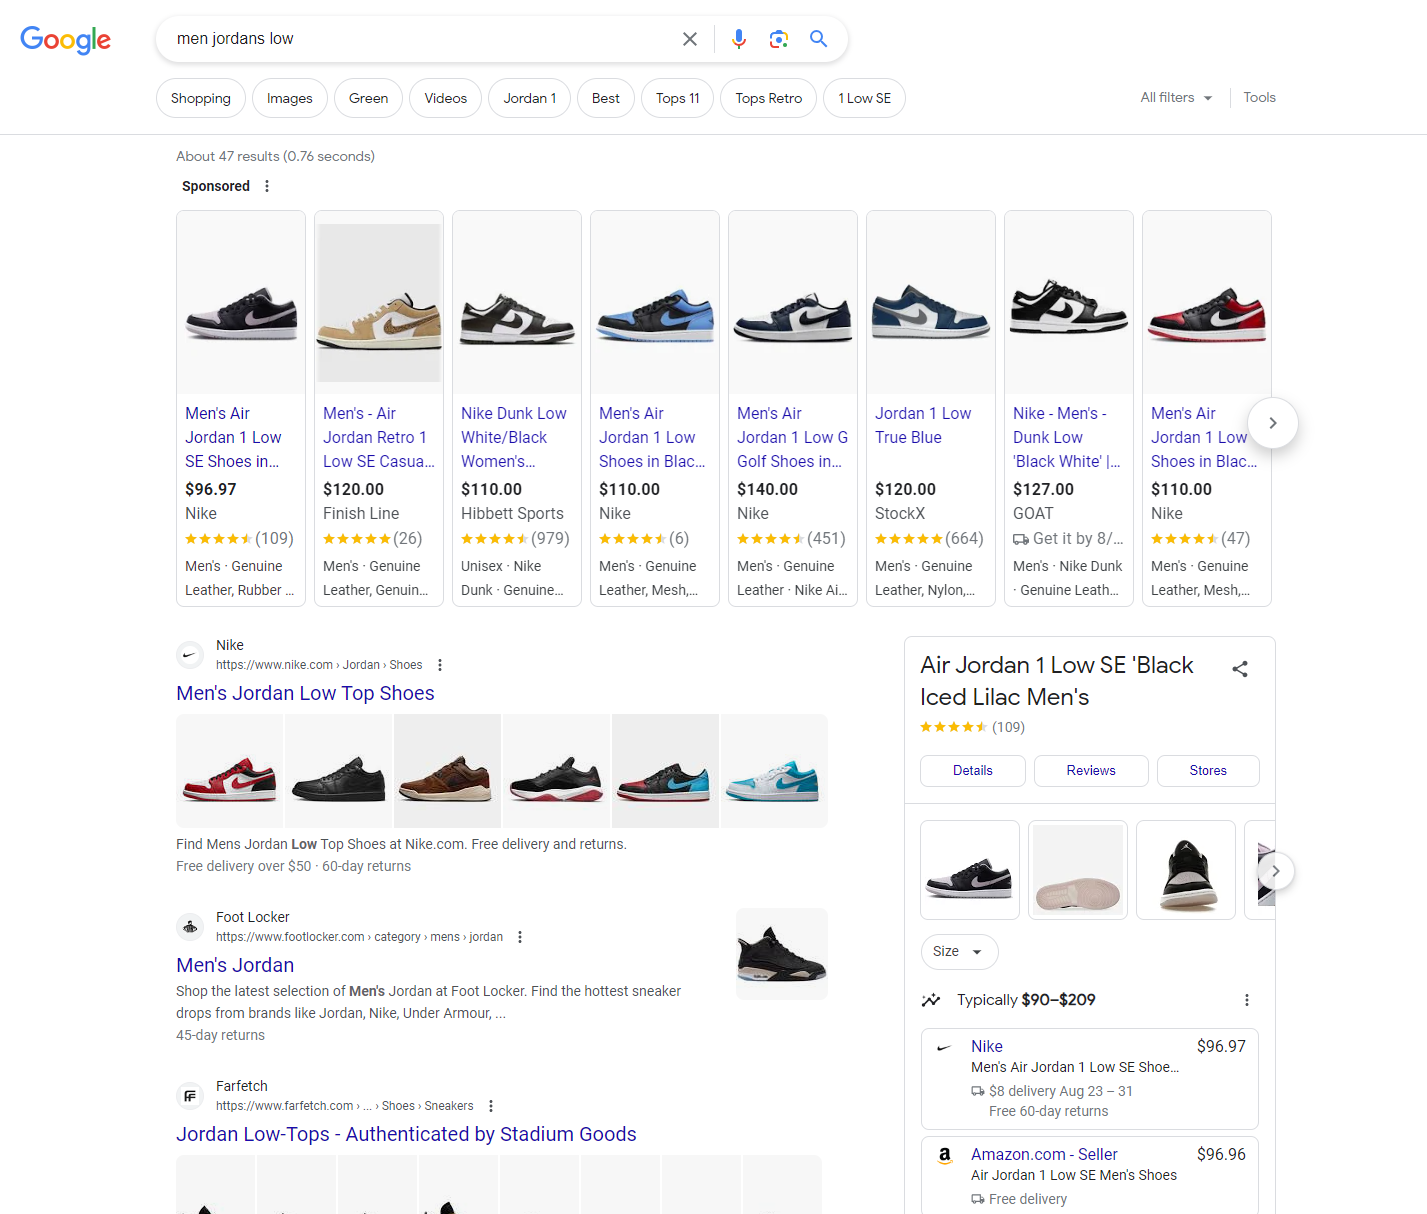  Google search for men jordans low